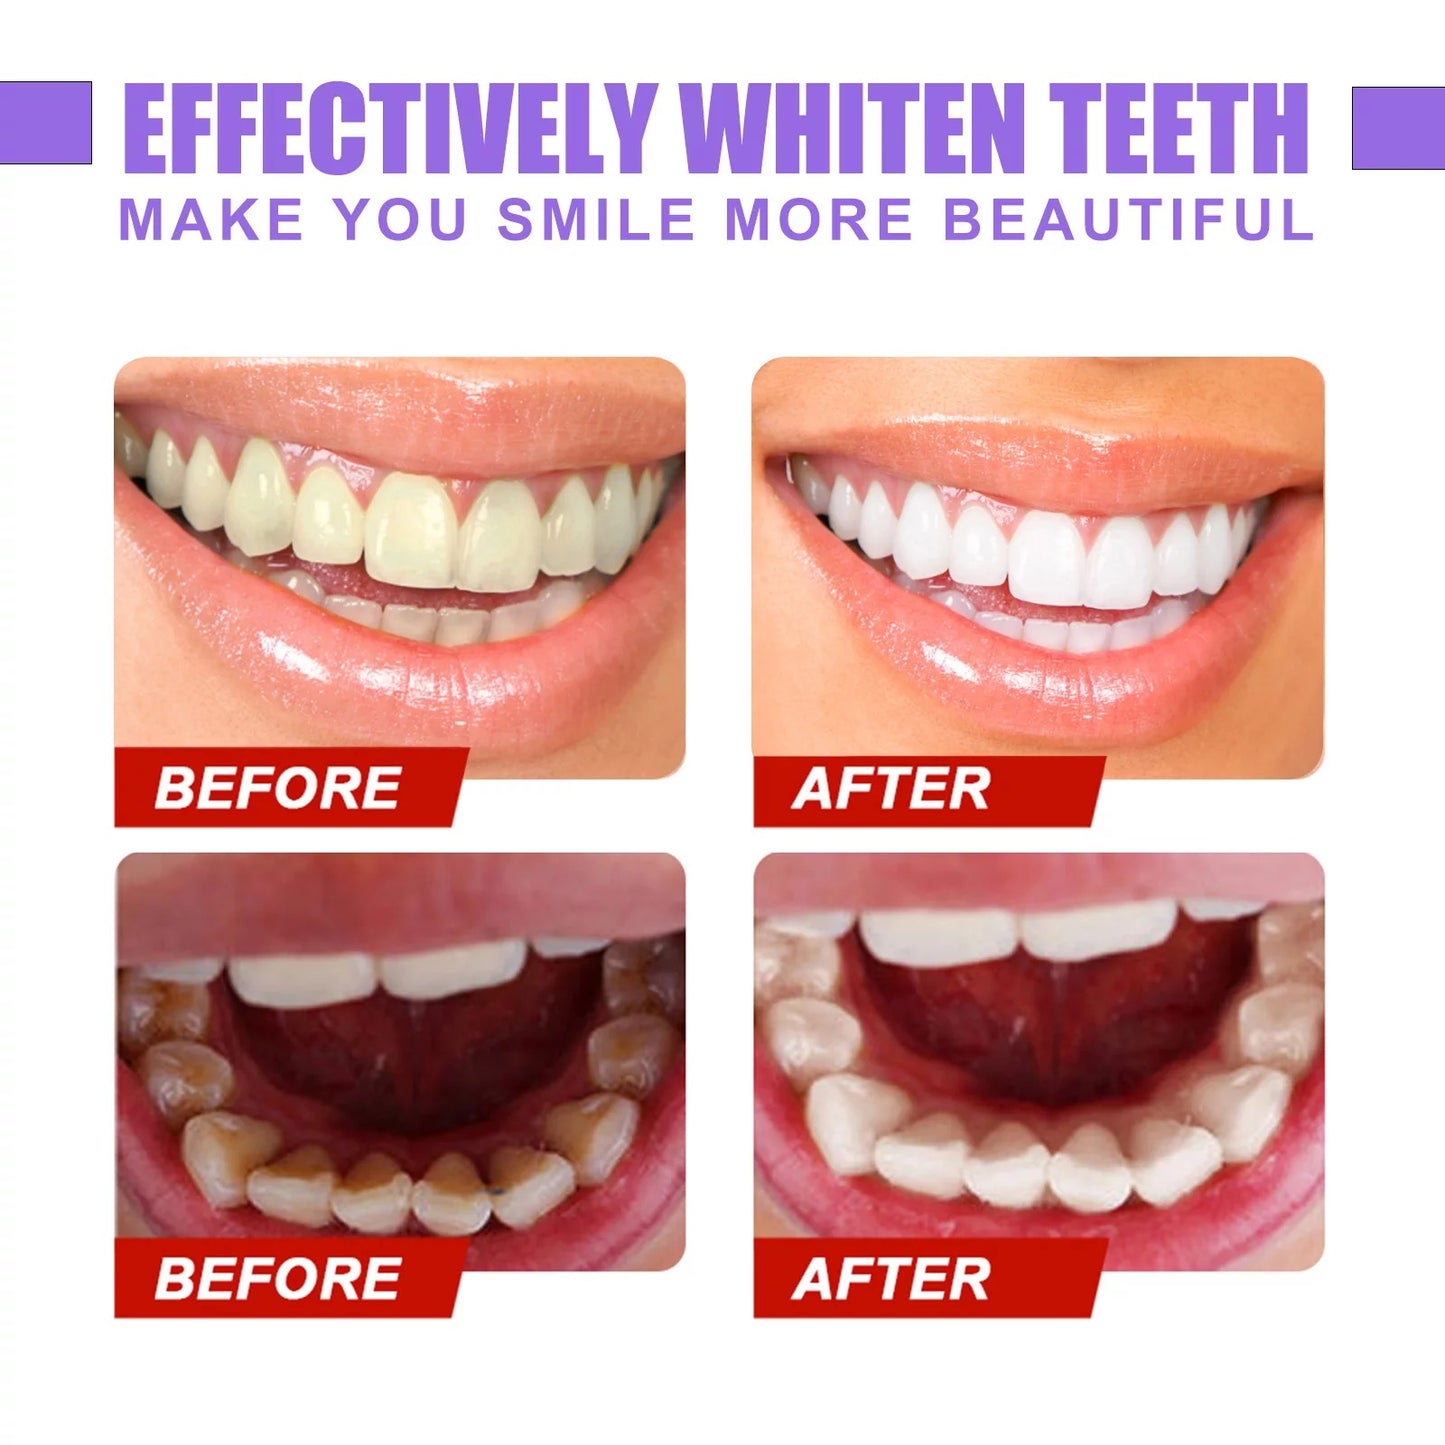 Teeth whitening toothpaste